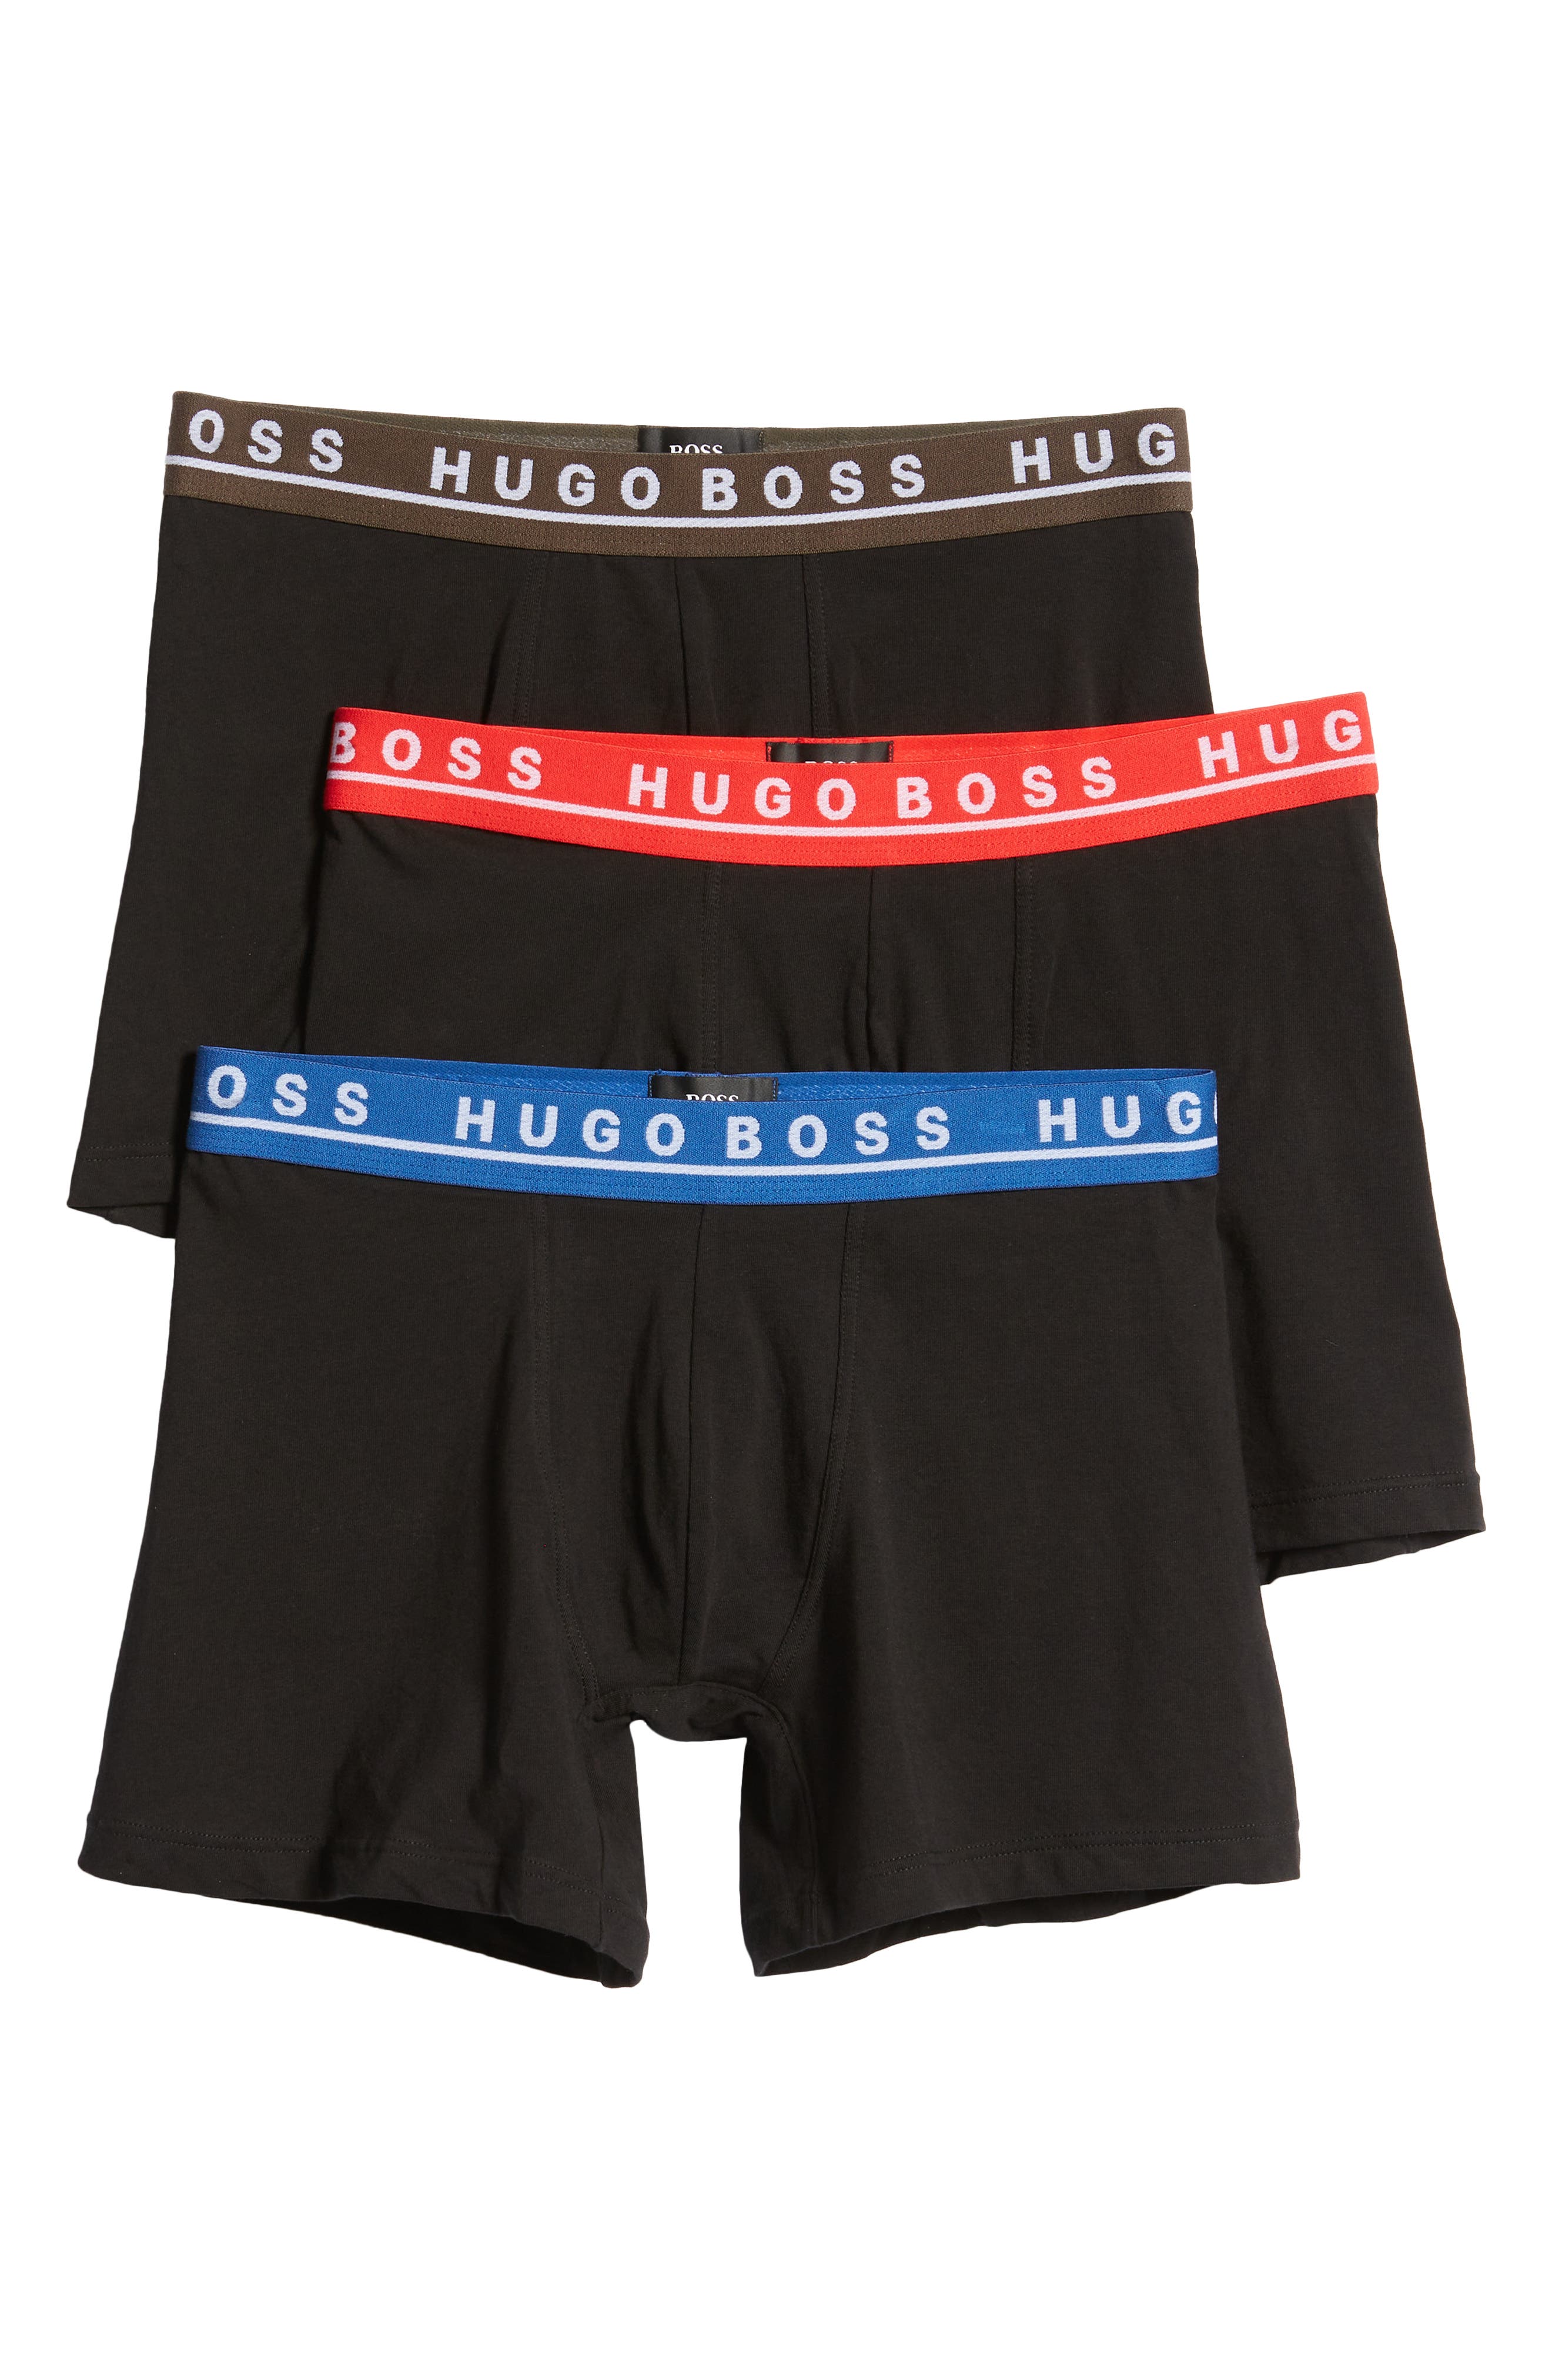 HUGO Assorted 3-Pack Boxer Briefs in Black Multi at Nordstrom, Size Medium